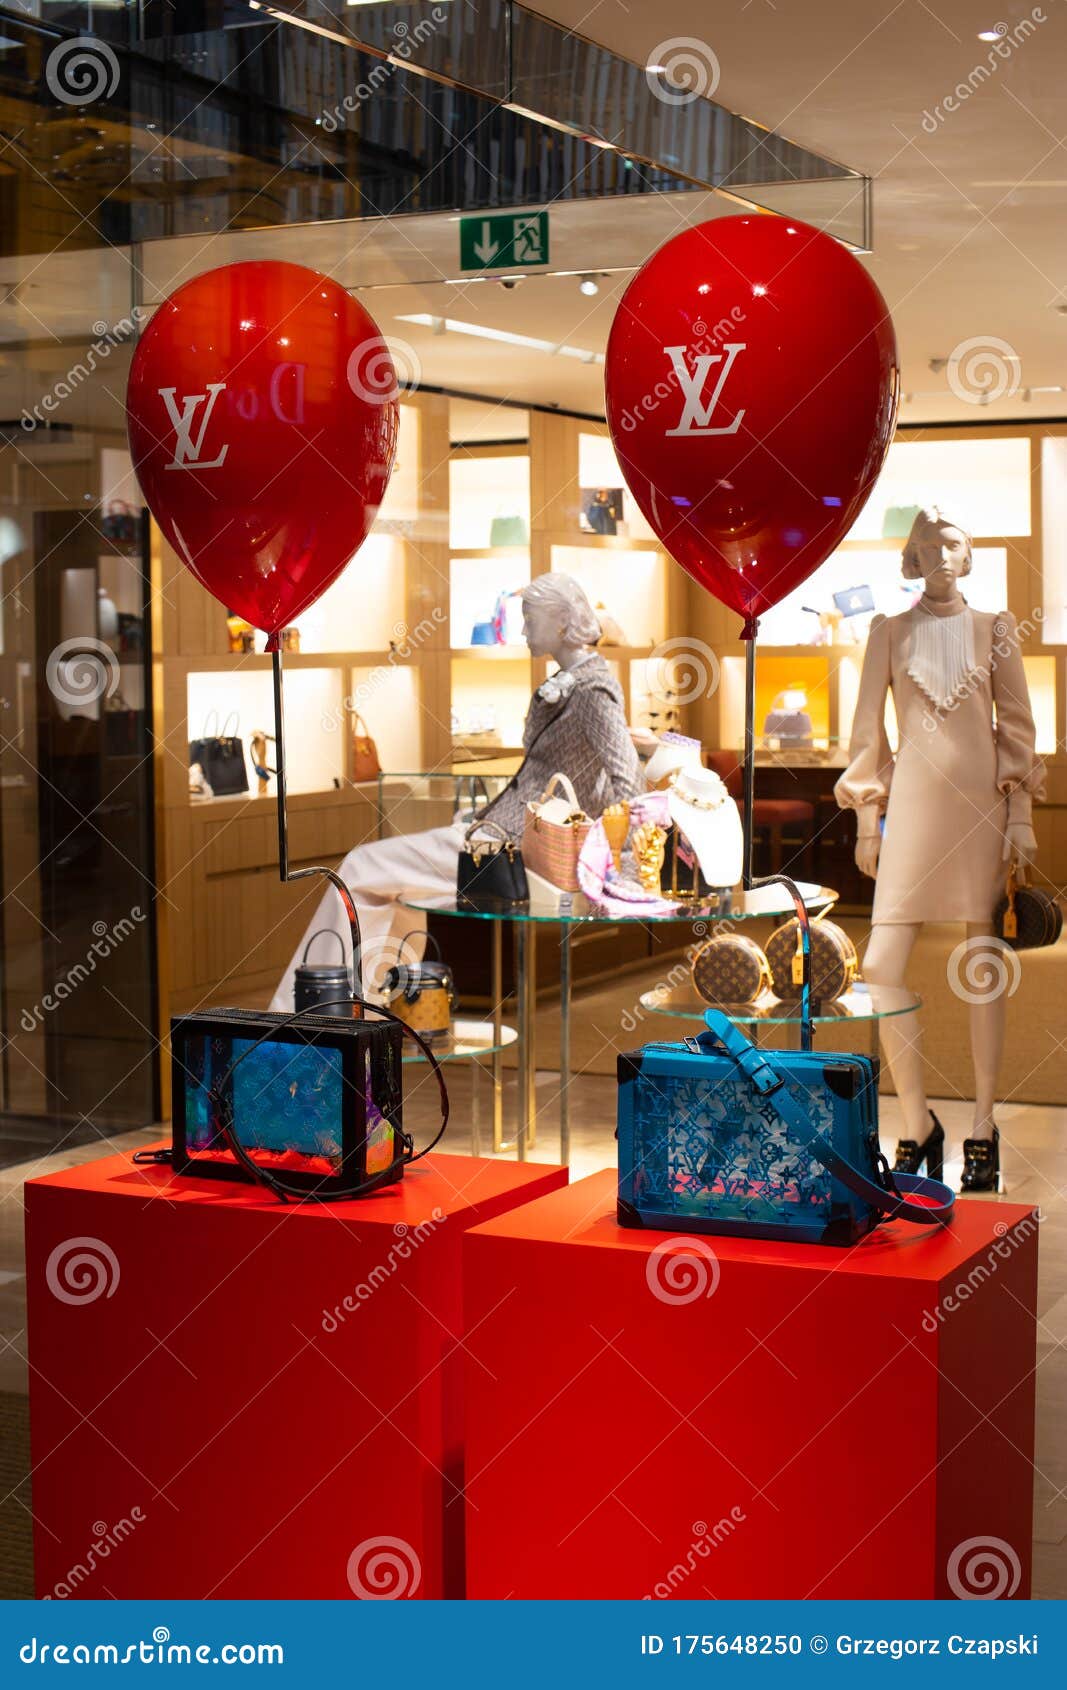 Louis Vuitton Handbags Outlet Store.